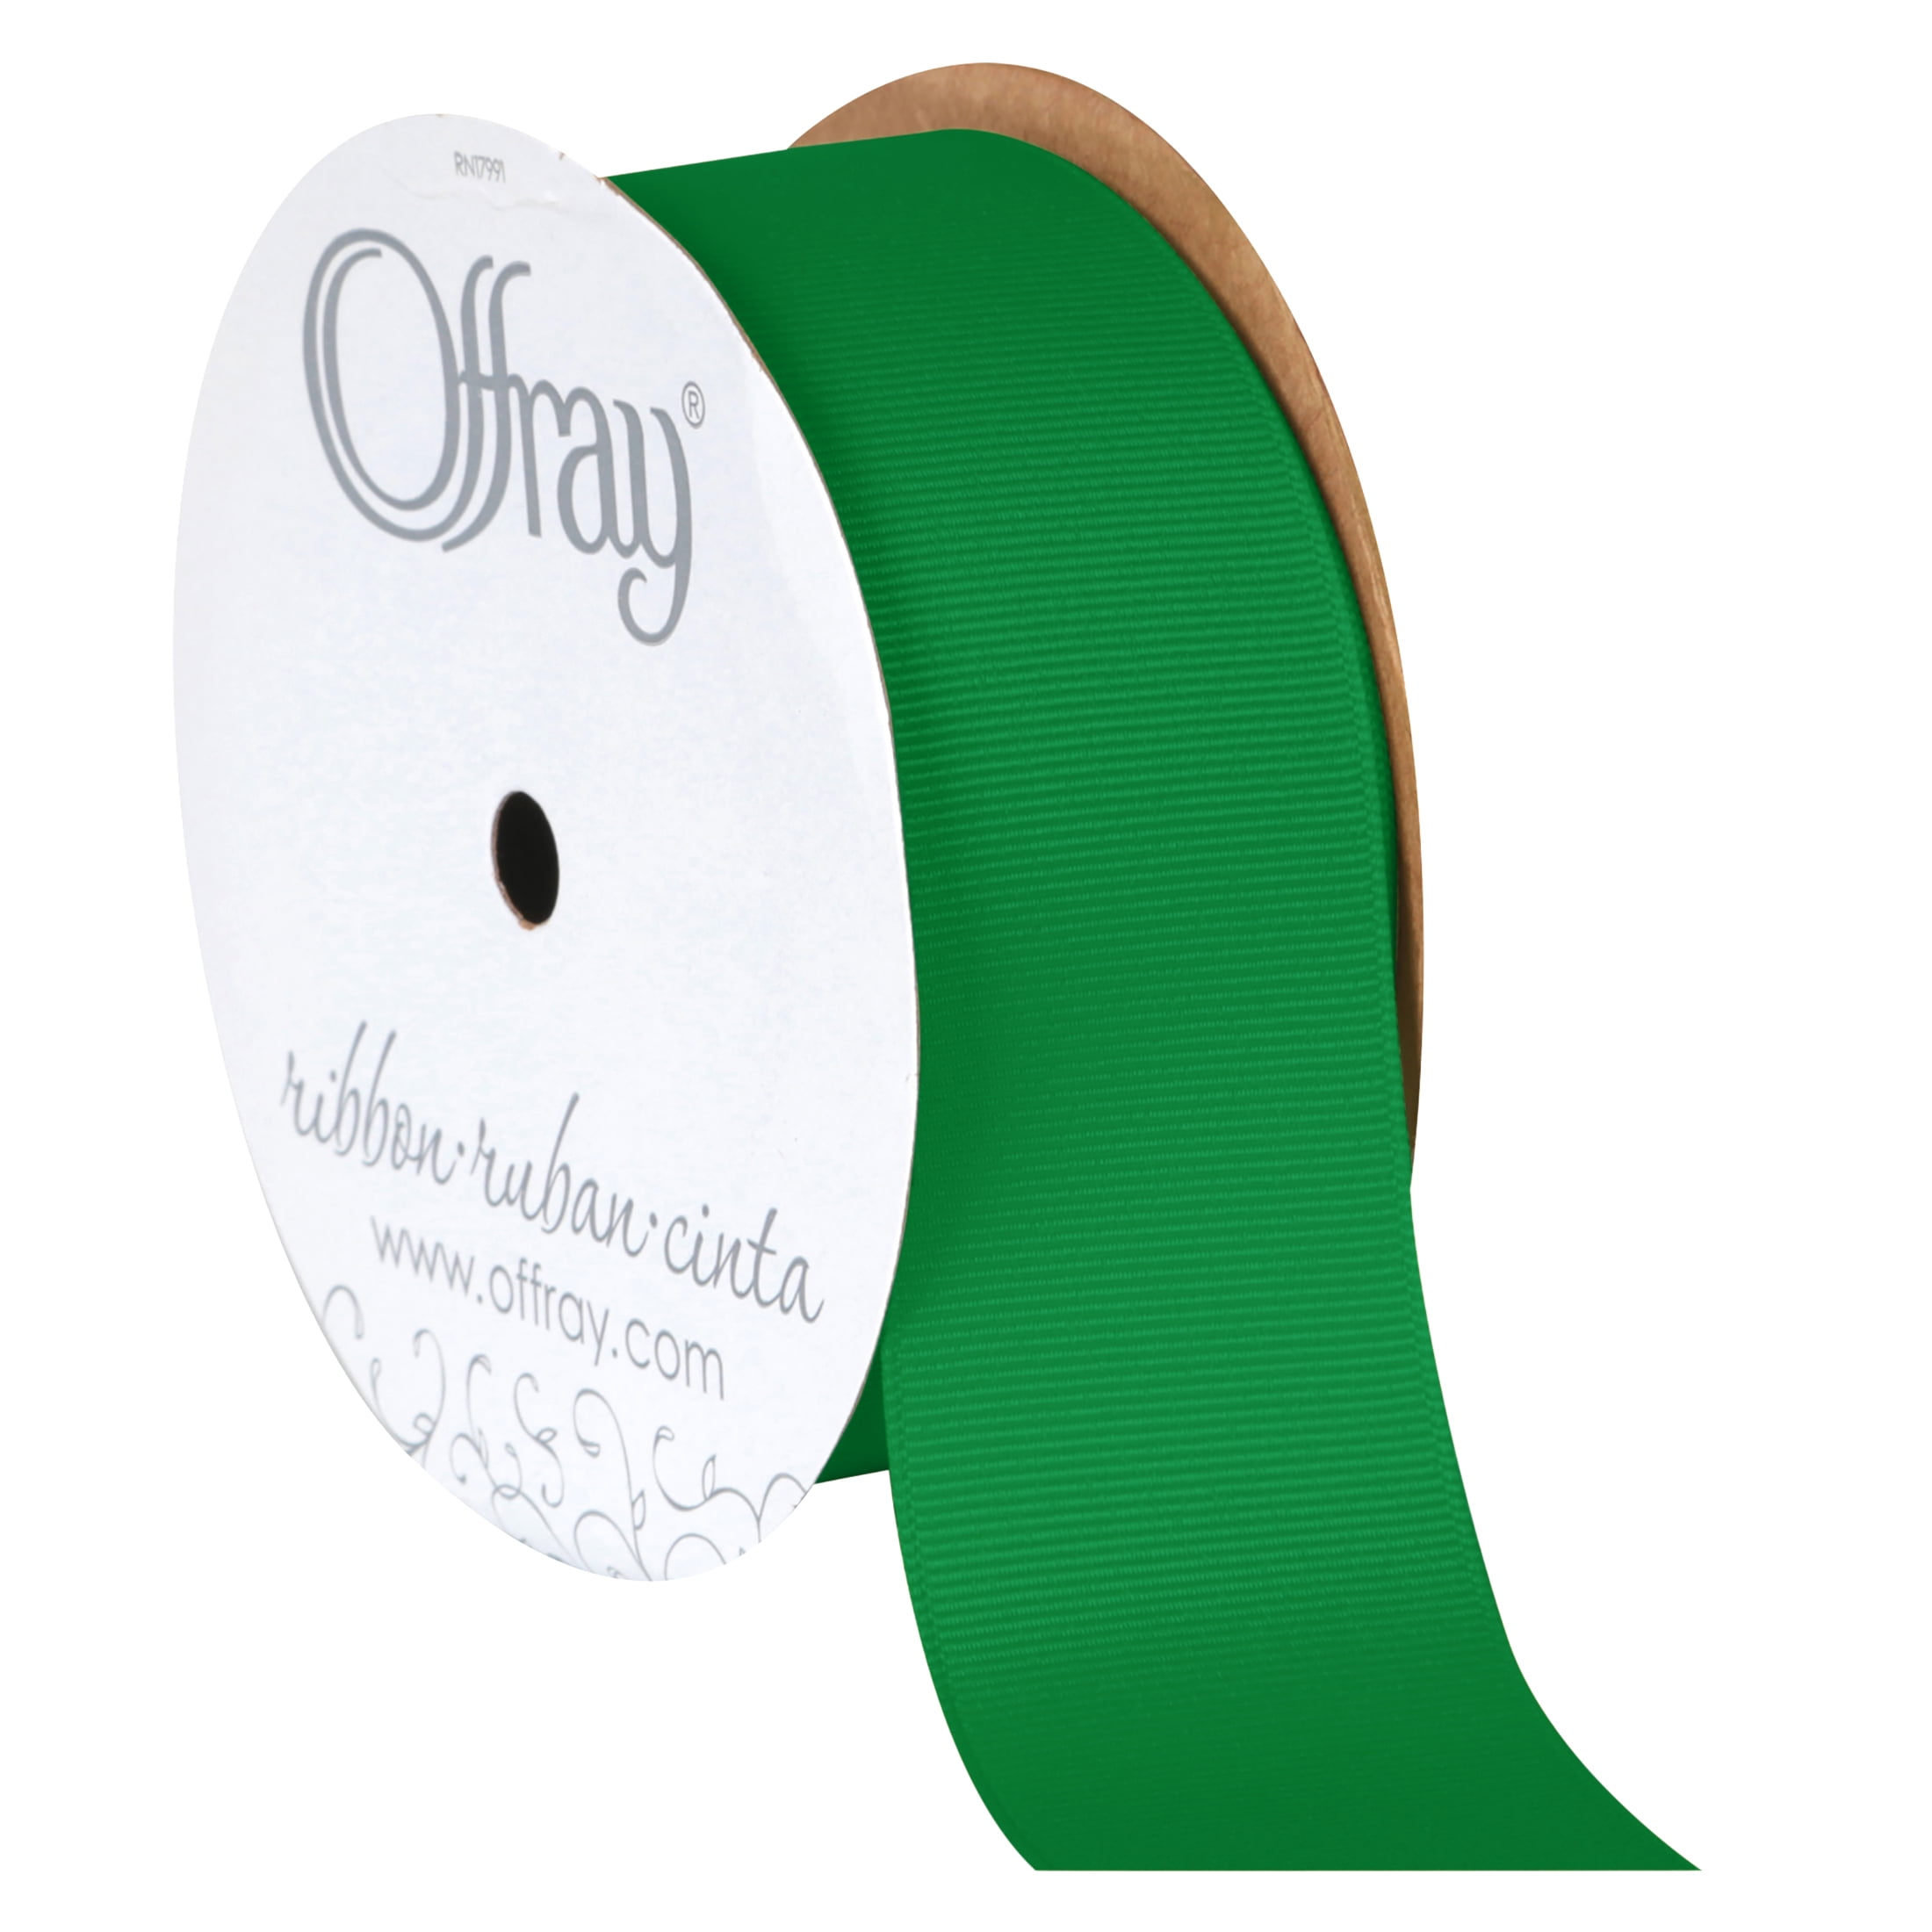 Offray Ribbon, Emerald Green 1 1/2 inch Grosgrain Polyester Ribbon, 12 feet  